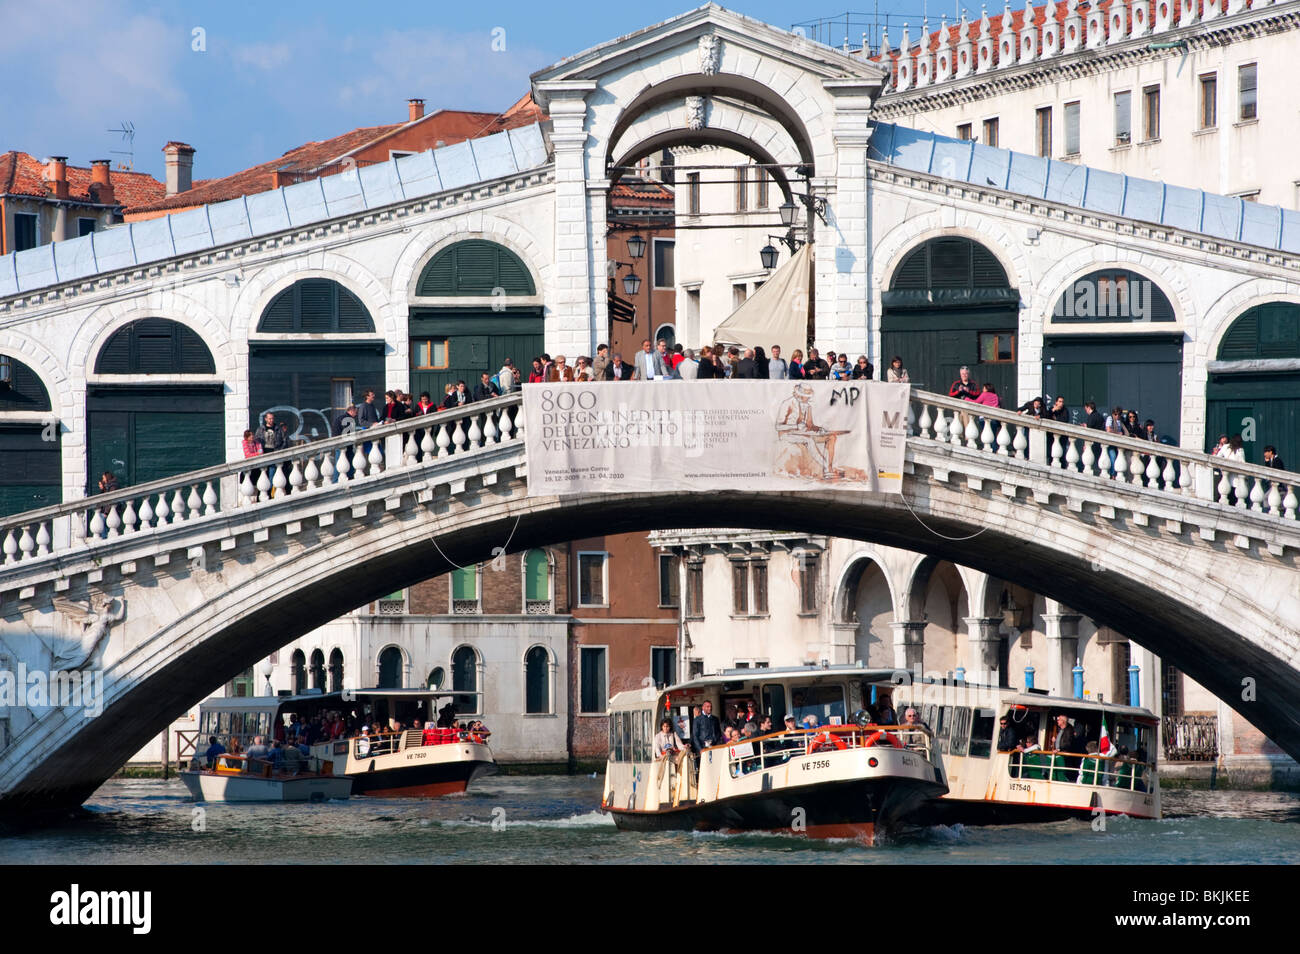 Vaporetti or public waterbuses passing below famous Rialto Bridge in Venice Italy Stock Photo